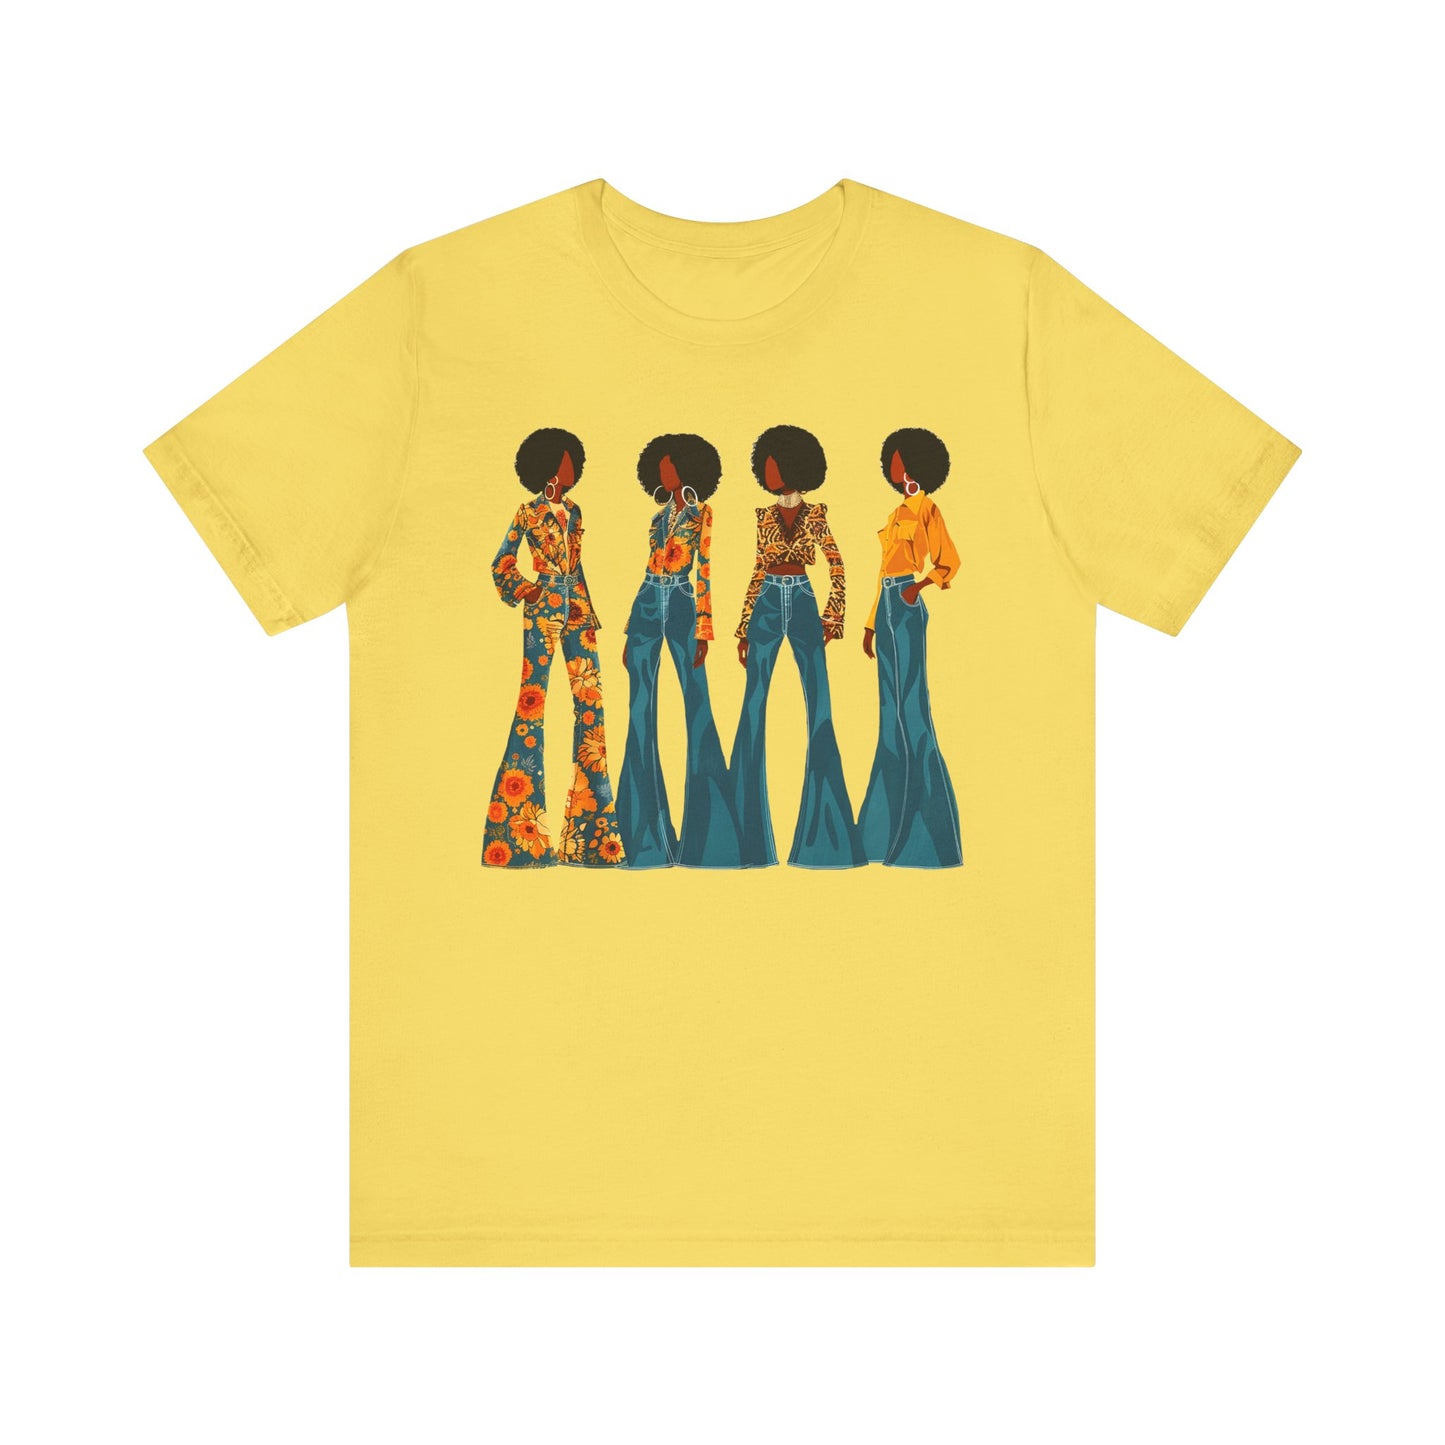 Afros and Bell Bottoms Shirt